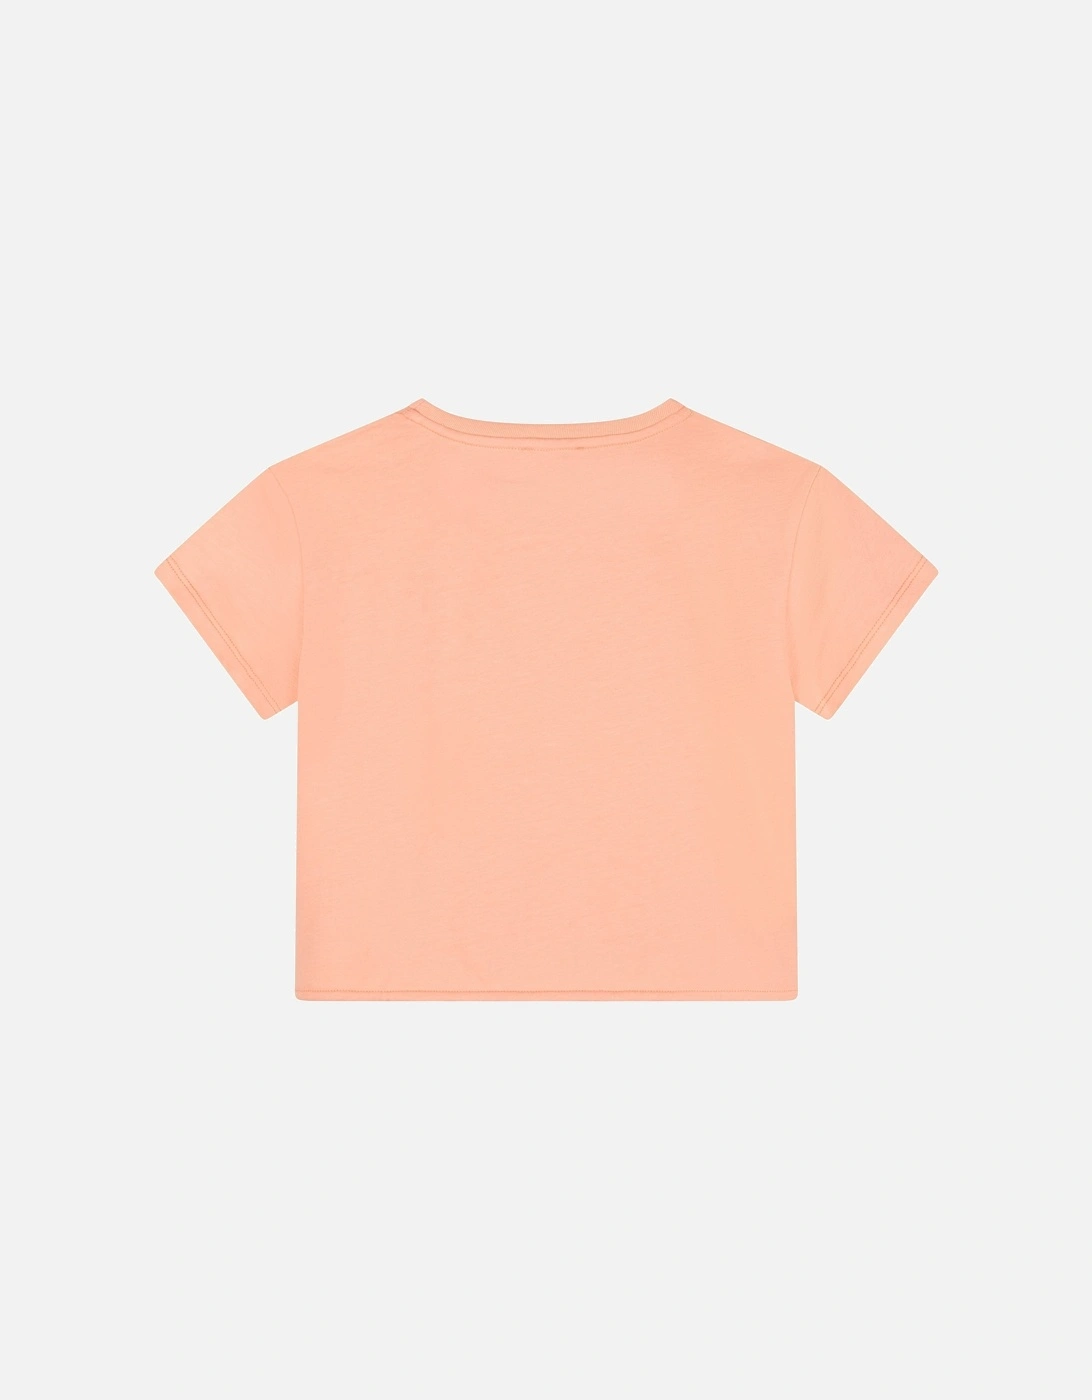 Girls Orange Heart T-Shirt